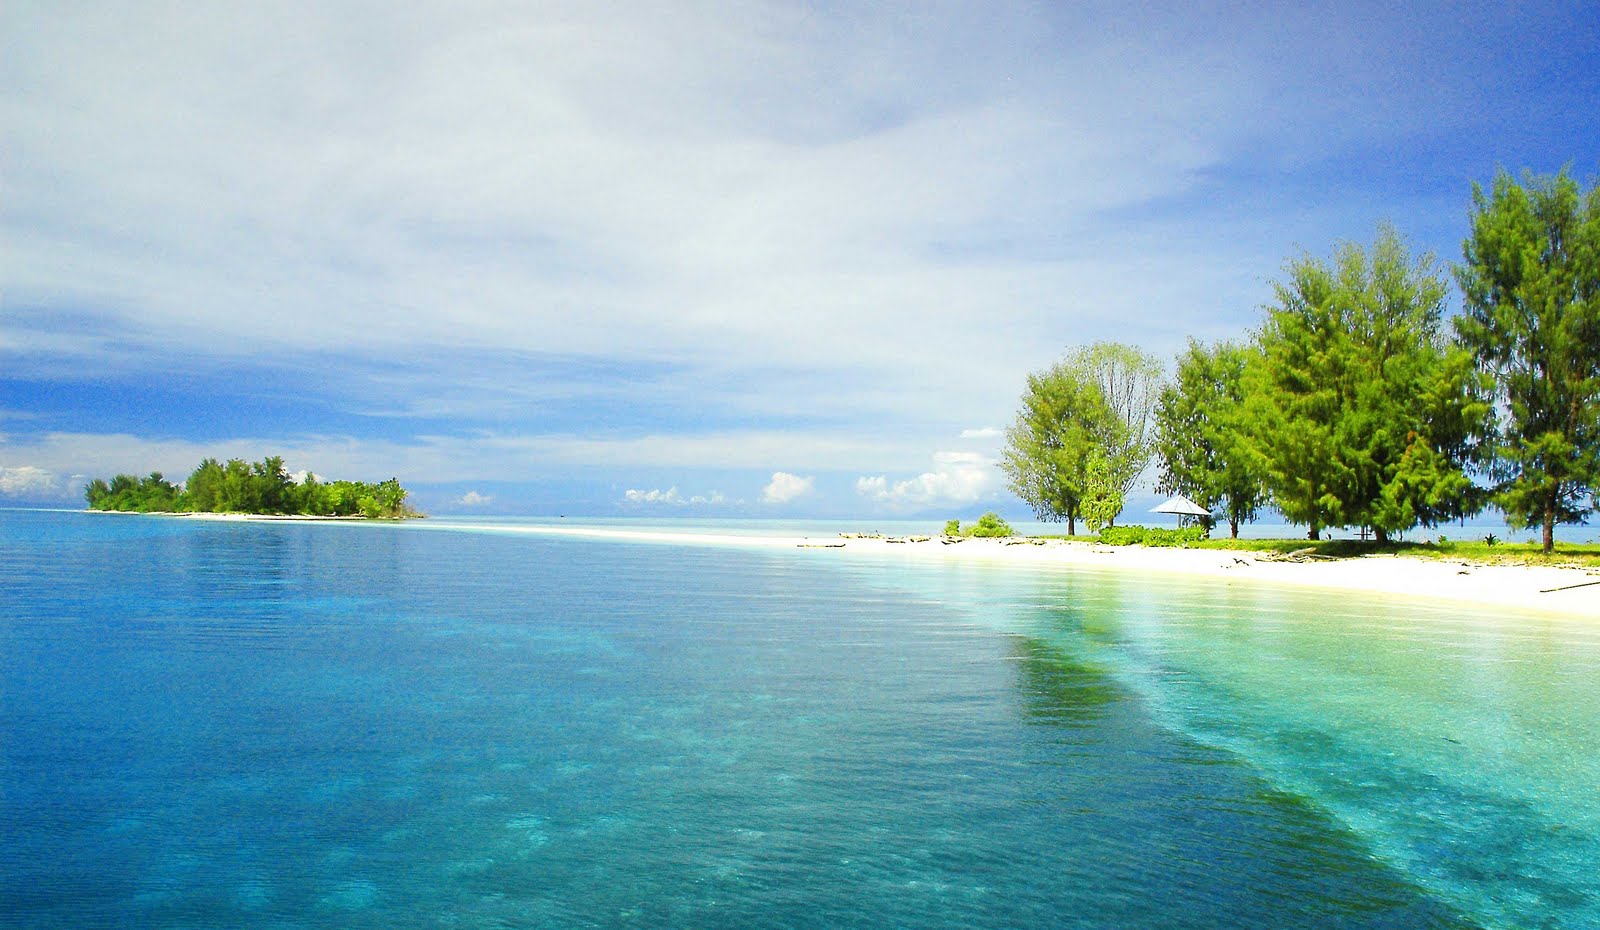 Pulau Dodola [image source]